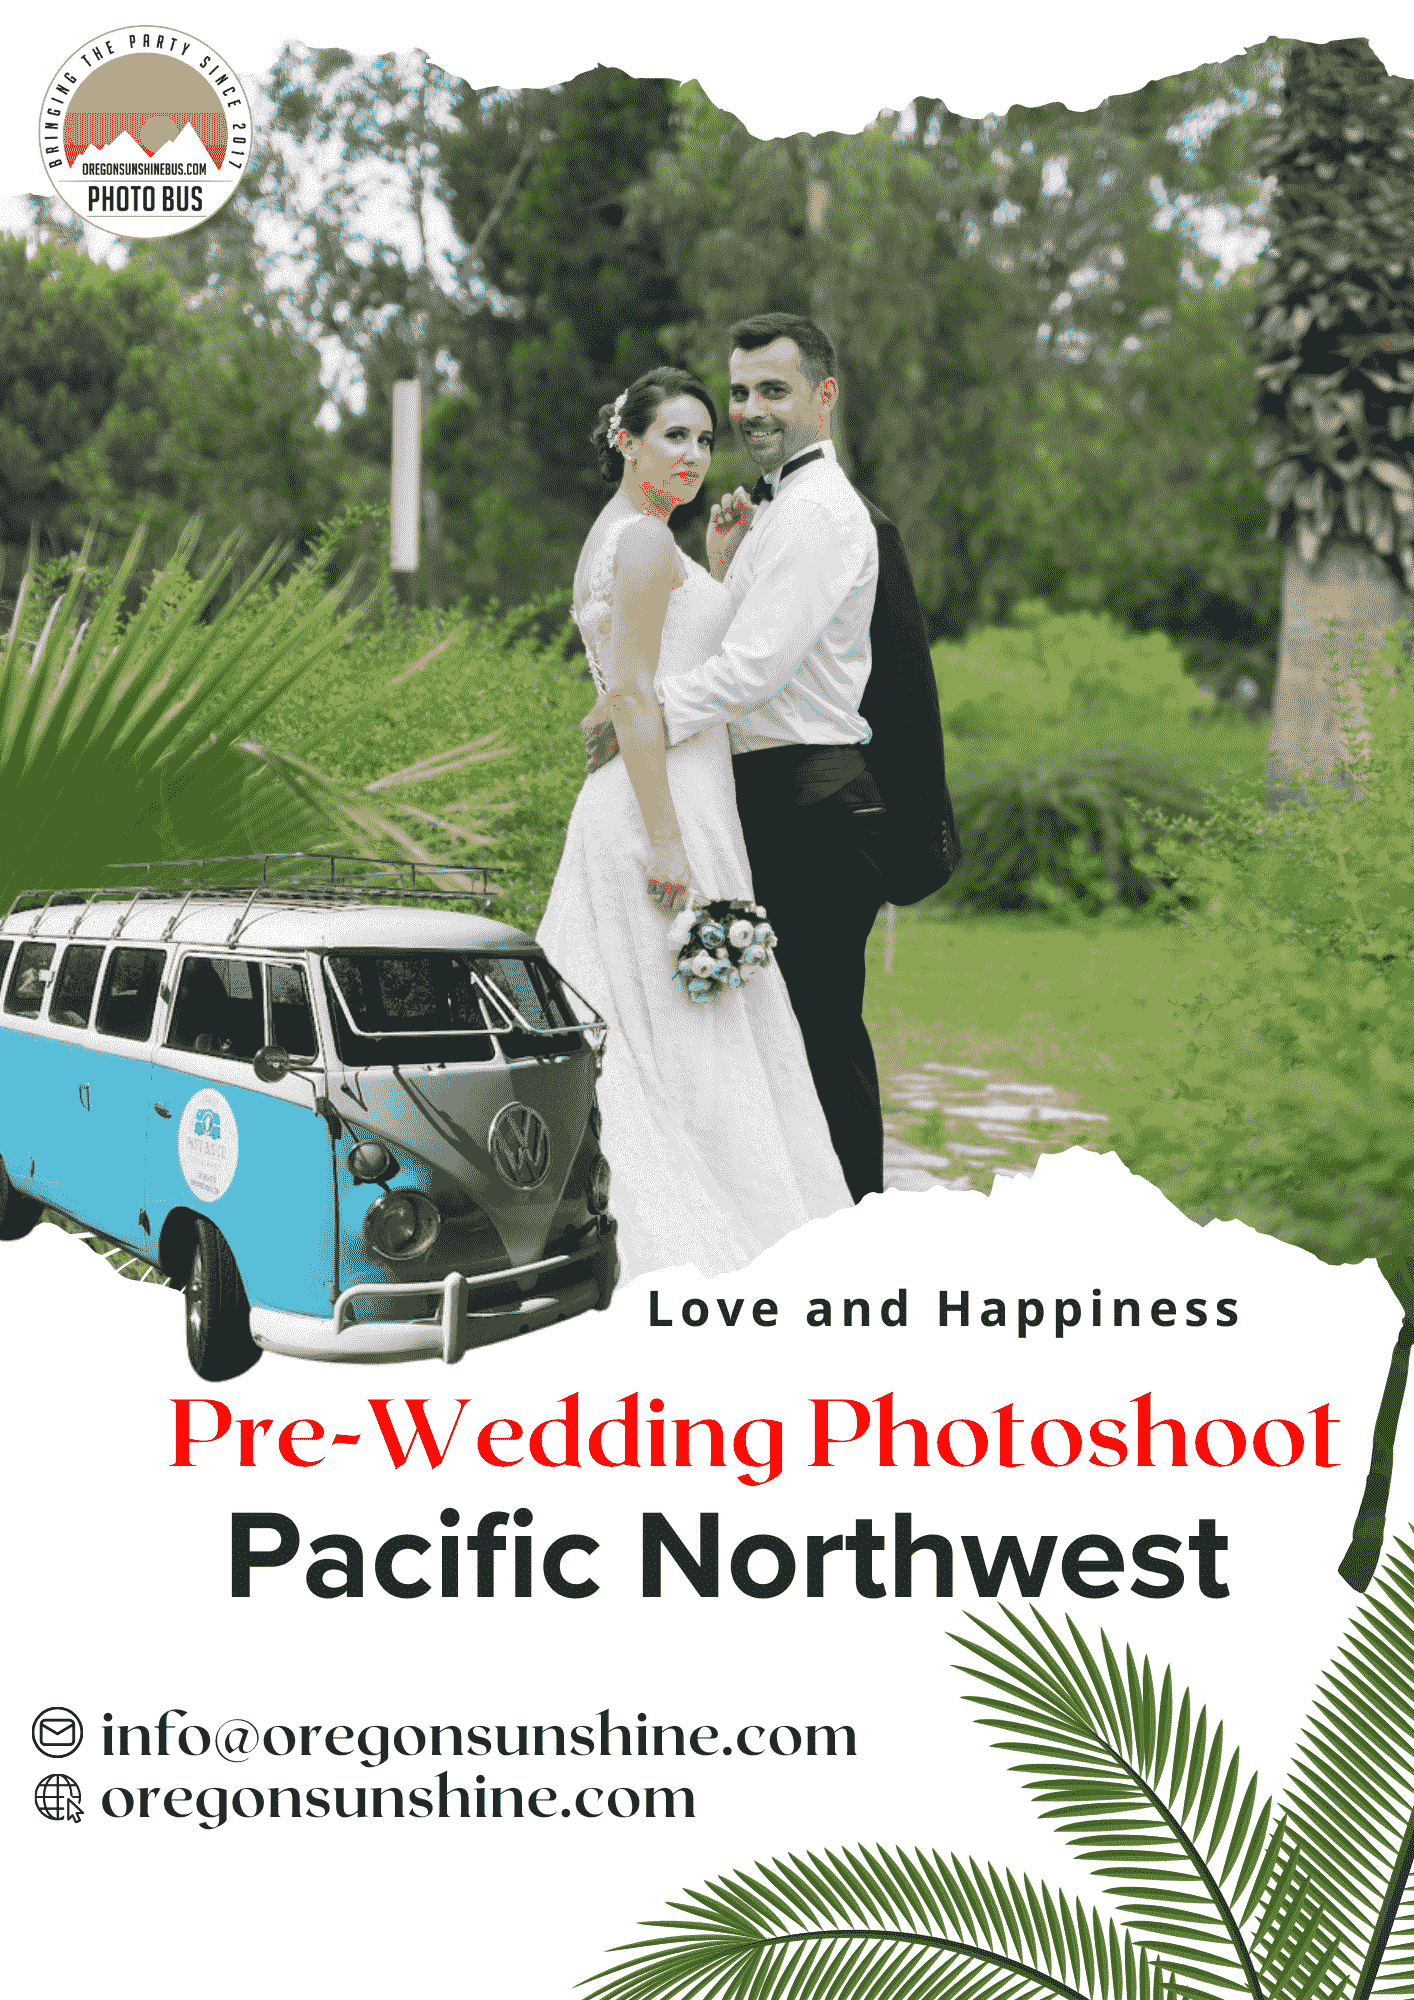 Pre-Wedding Photoshoot Pacific Northwest - Oregon Sunshine - Other Professional Services